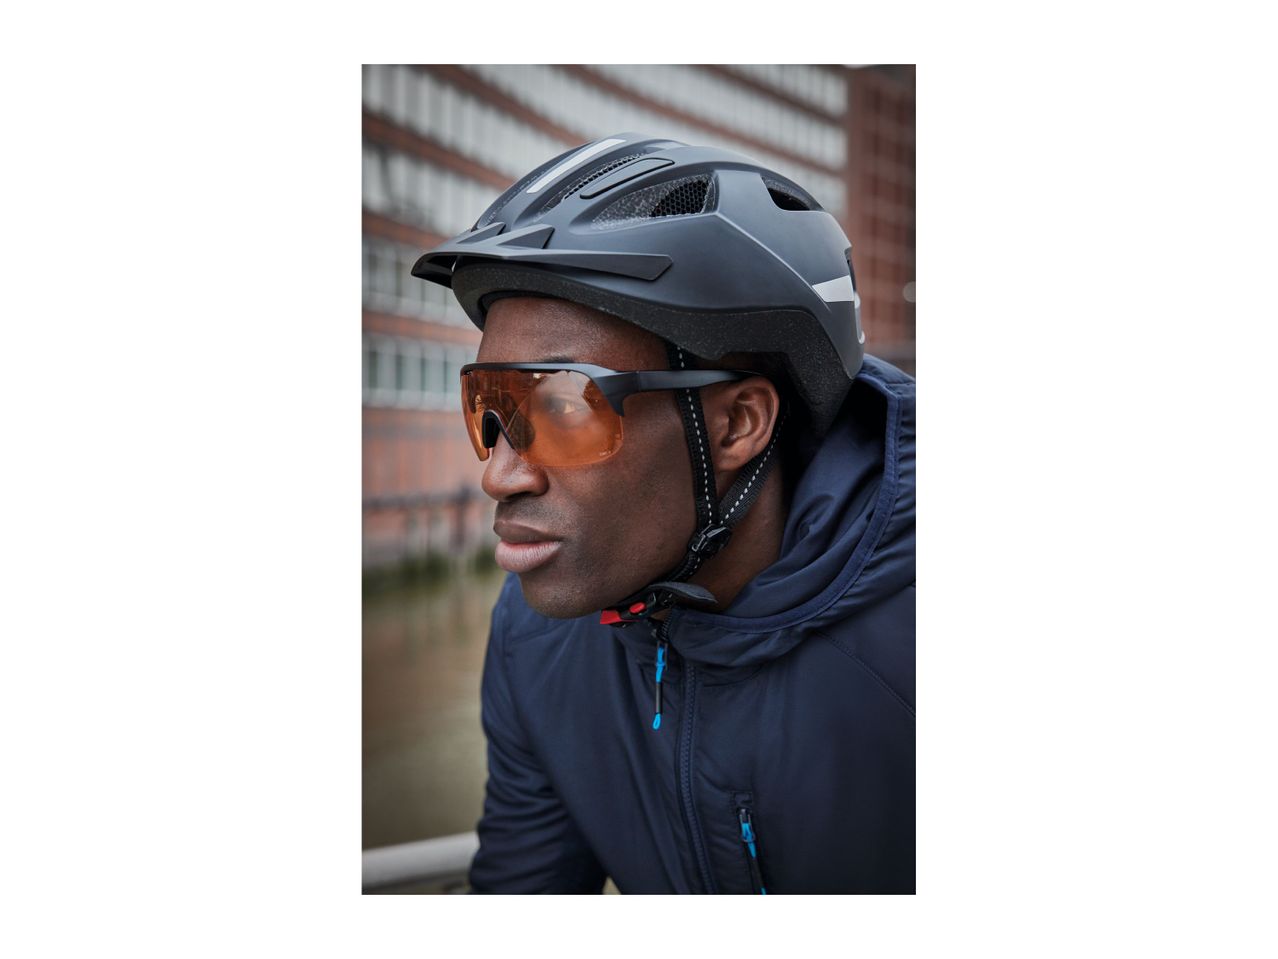 Go to full screen view: Crivit Bike Helmet with Rear Light - Image 5